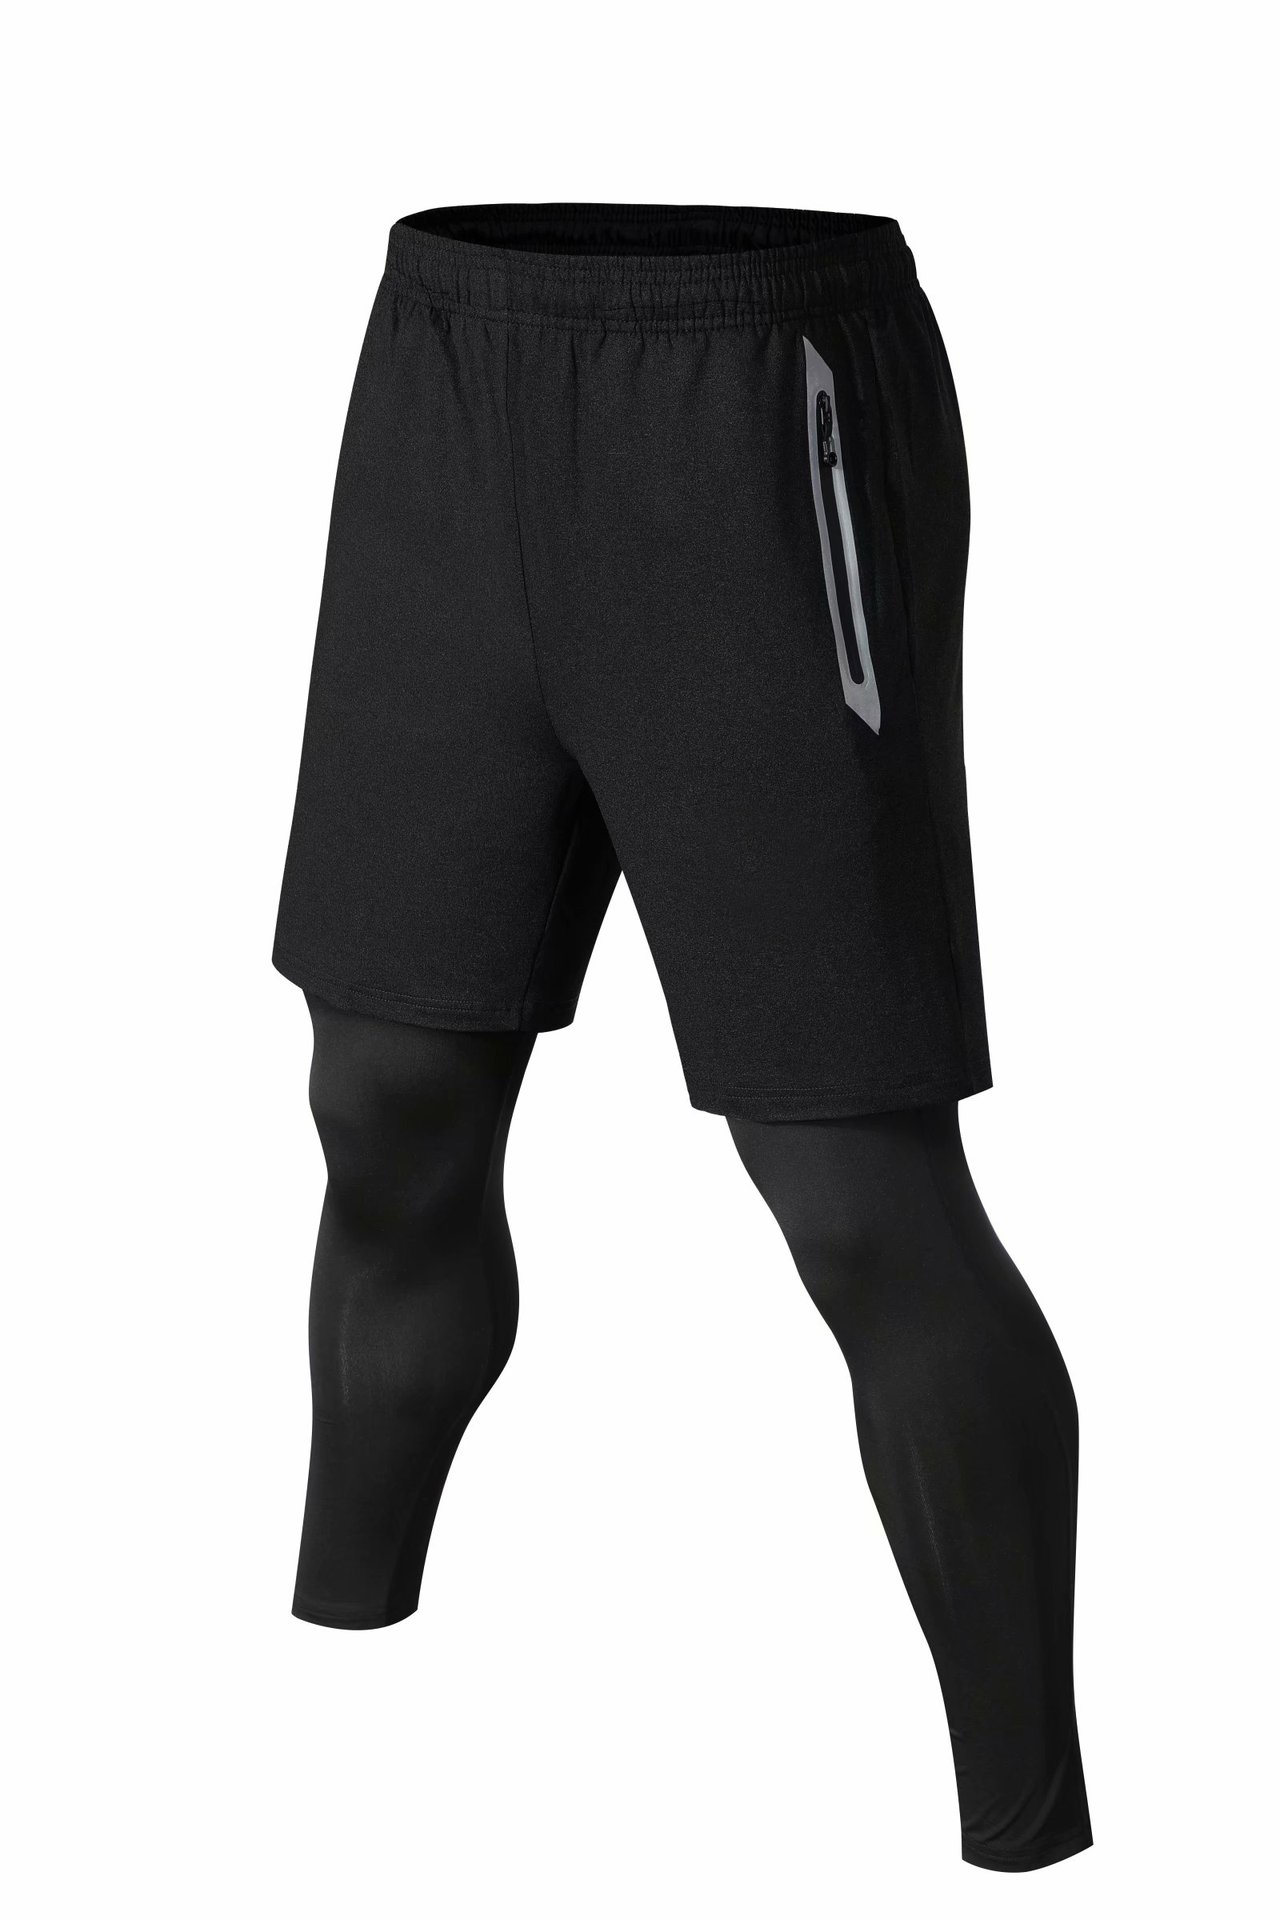 Men's 2 in 1 Sports Shorts Dry Fit Running Basketball Leggings Tights Pants  - Black - CY18NHIDCUI Size Medium